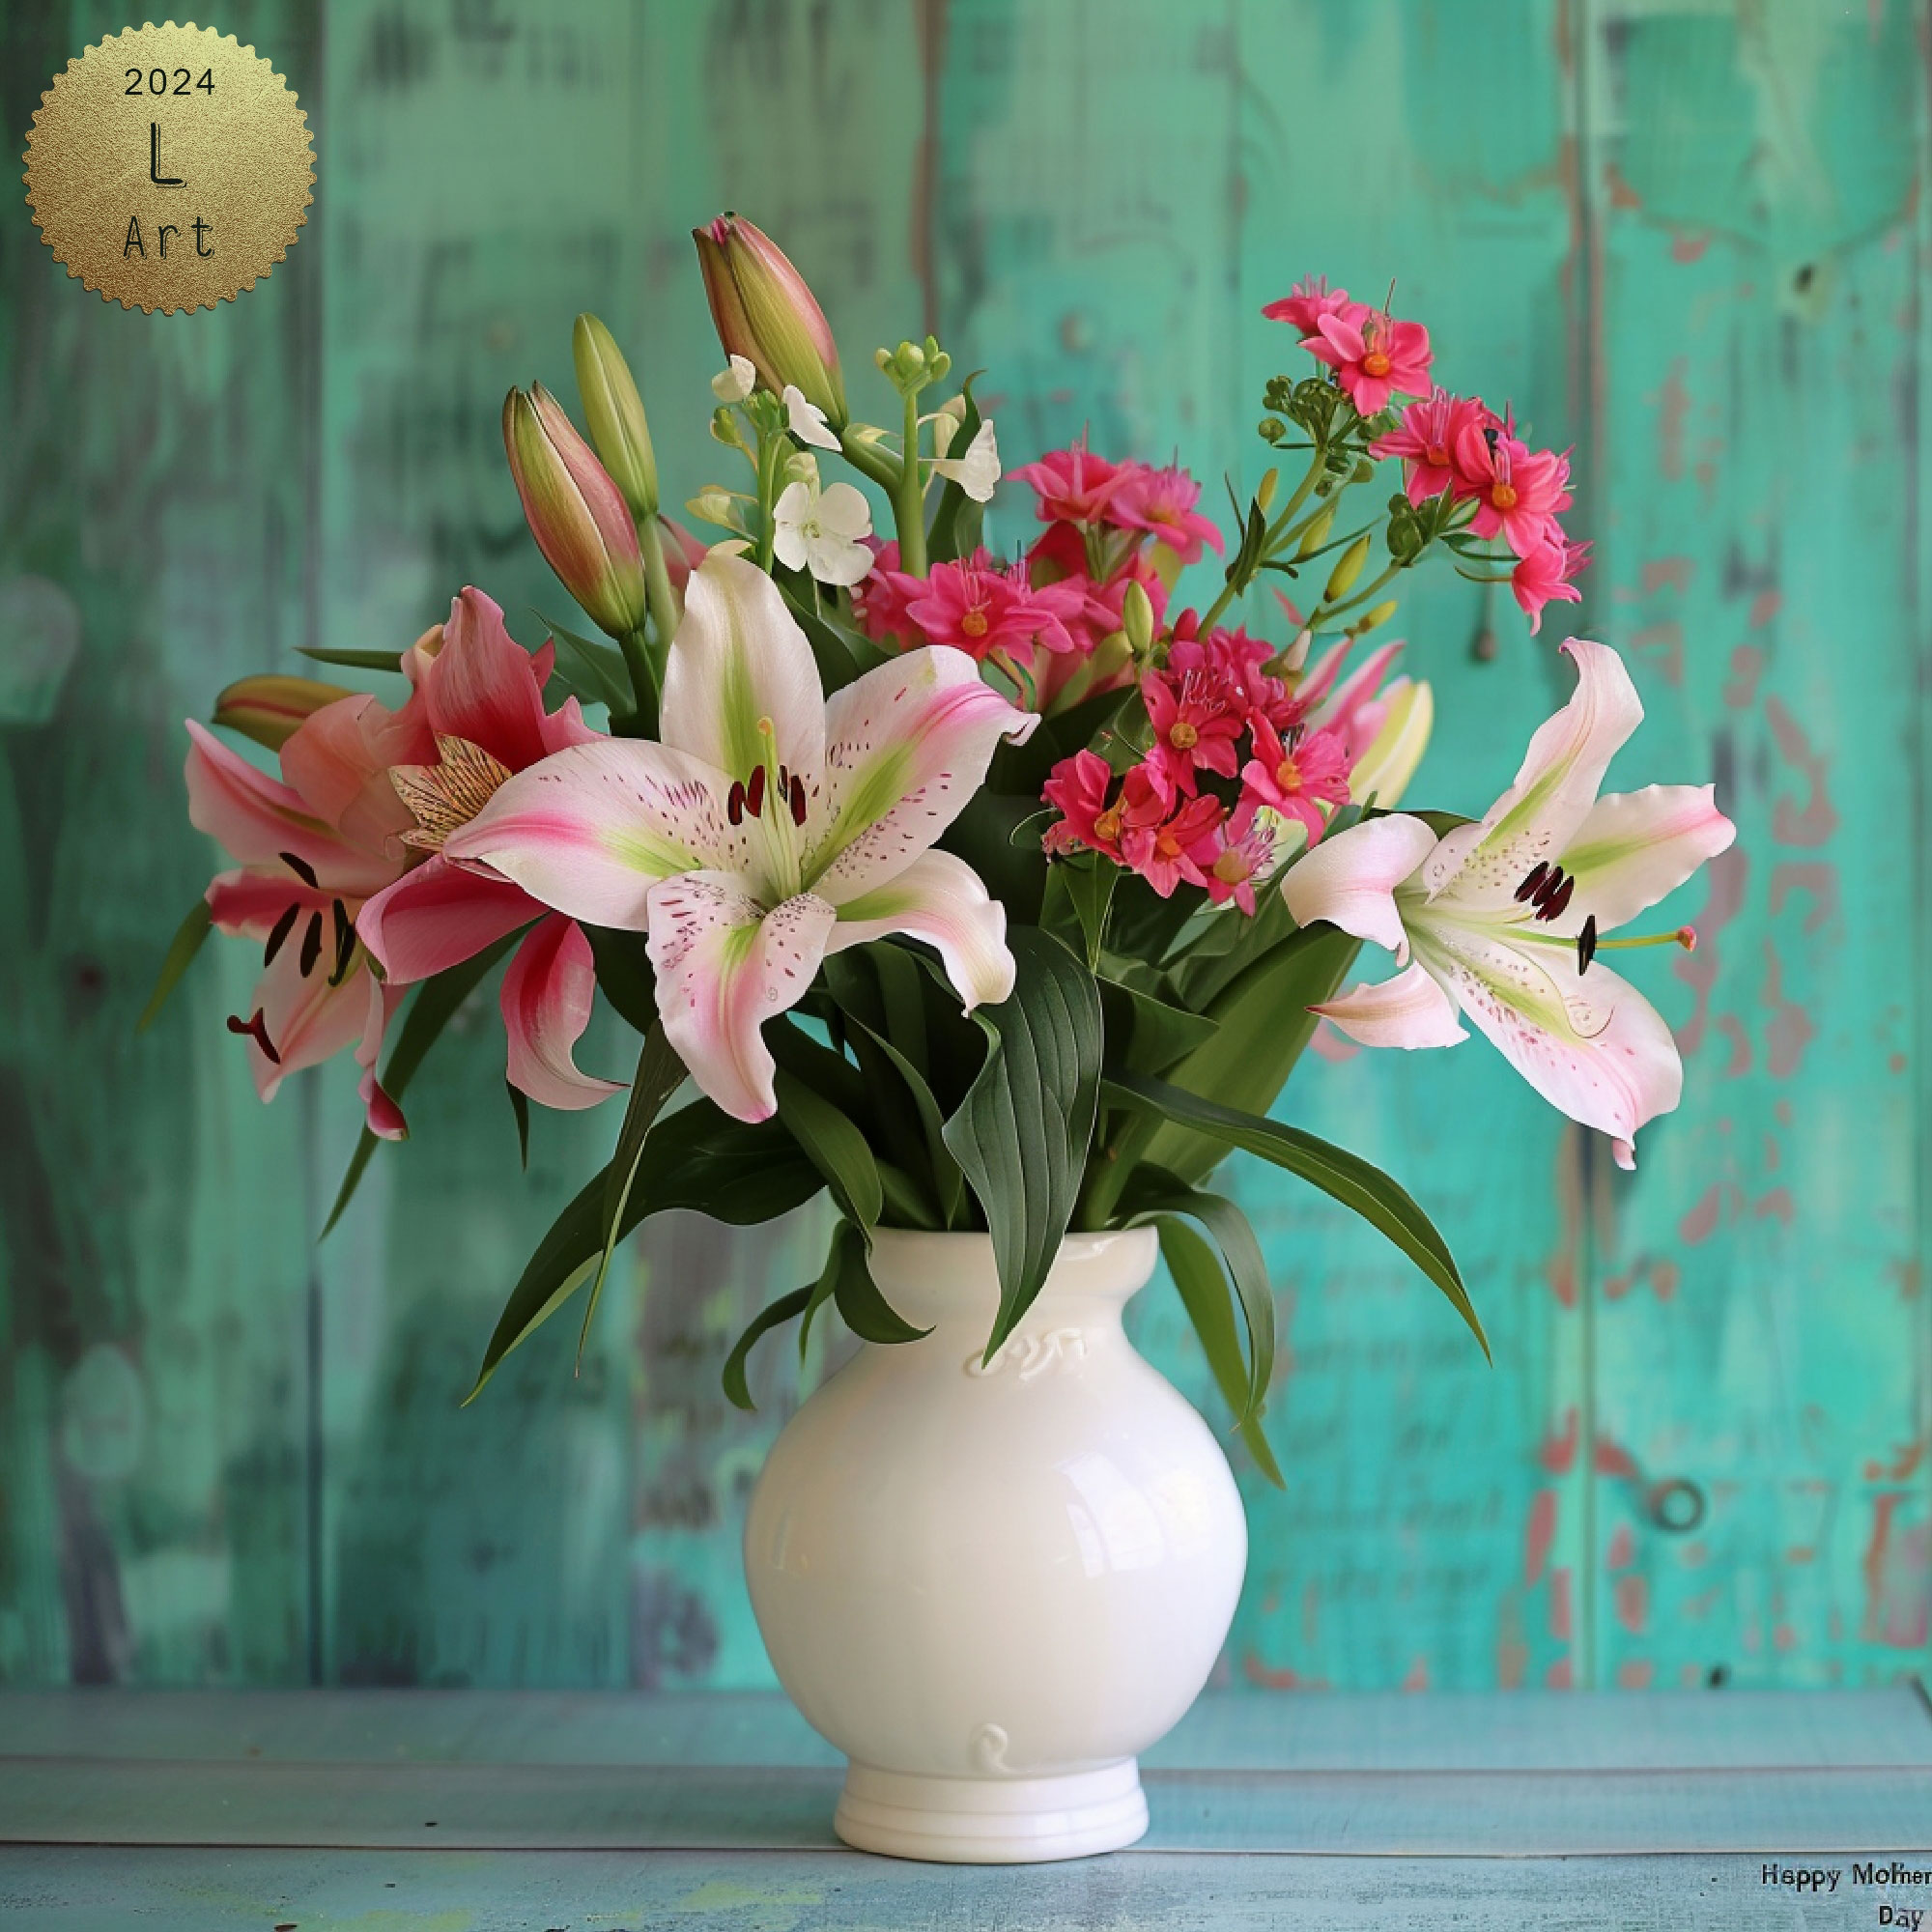 leonchou1968_A_vibrant_bouquet_of_flowers_in_a_white_vase_is_se_fdf181dd-9363-4d17-adab-624bb2fd608e.jpg